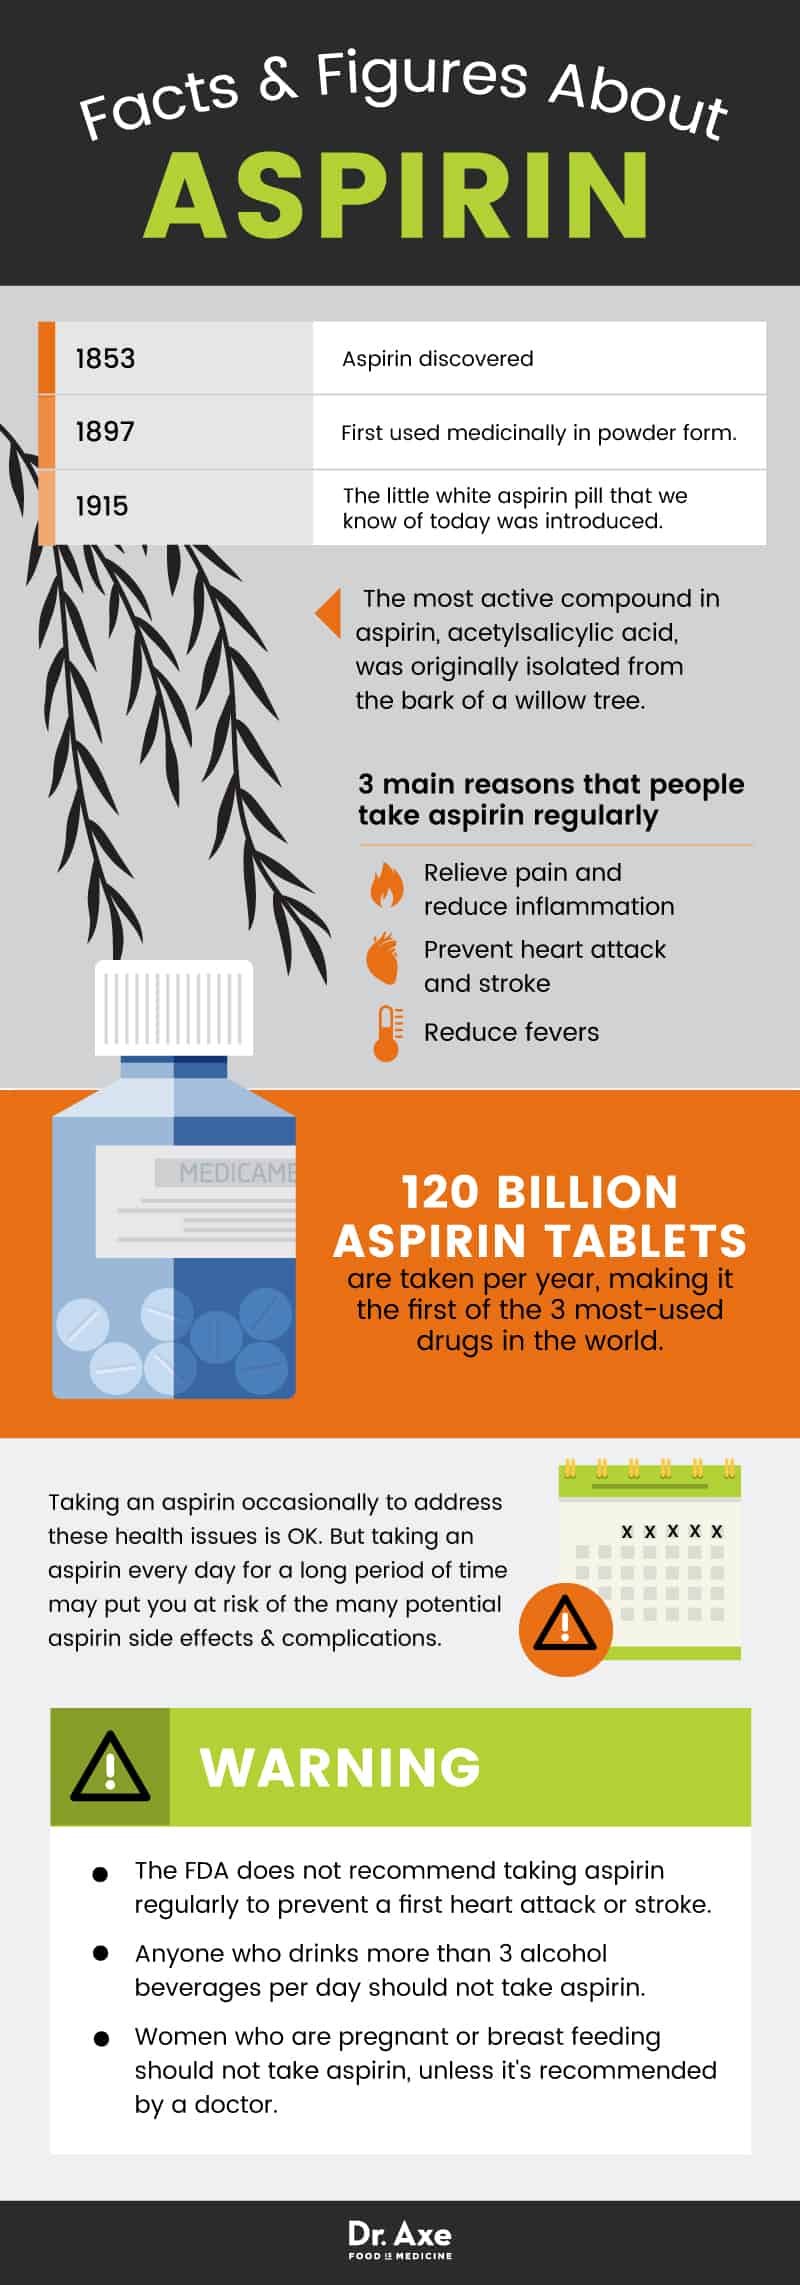 Aspirine bijwerkingen: aspirine feiten - Dr. Axe